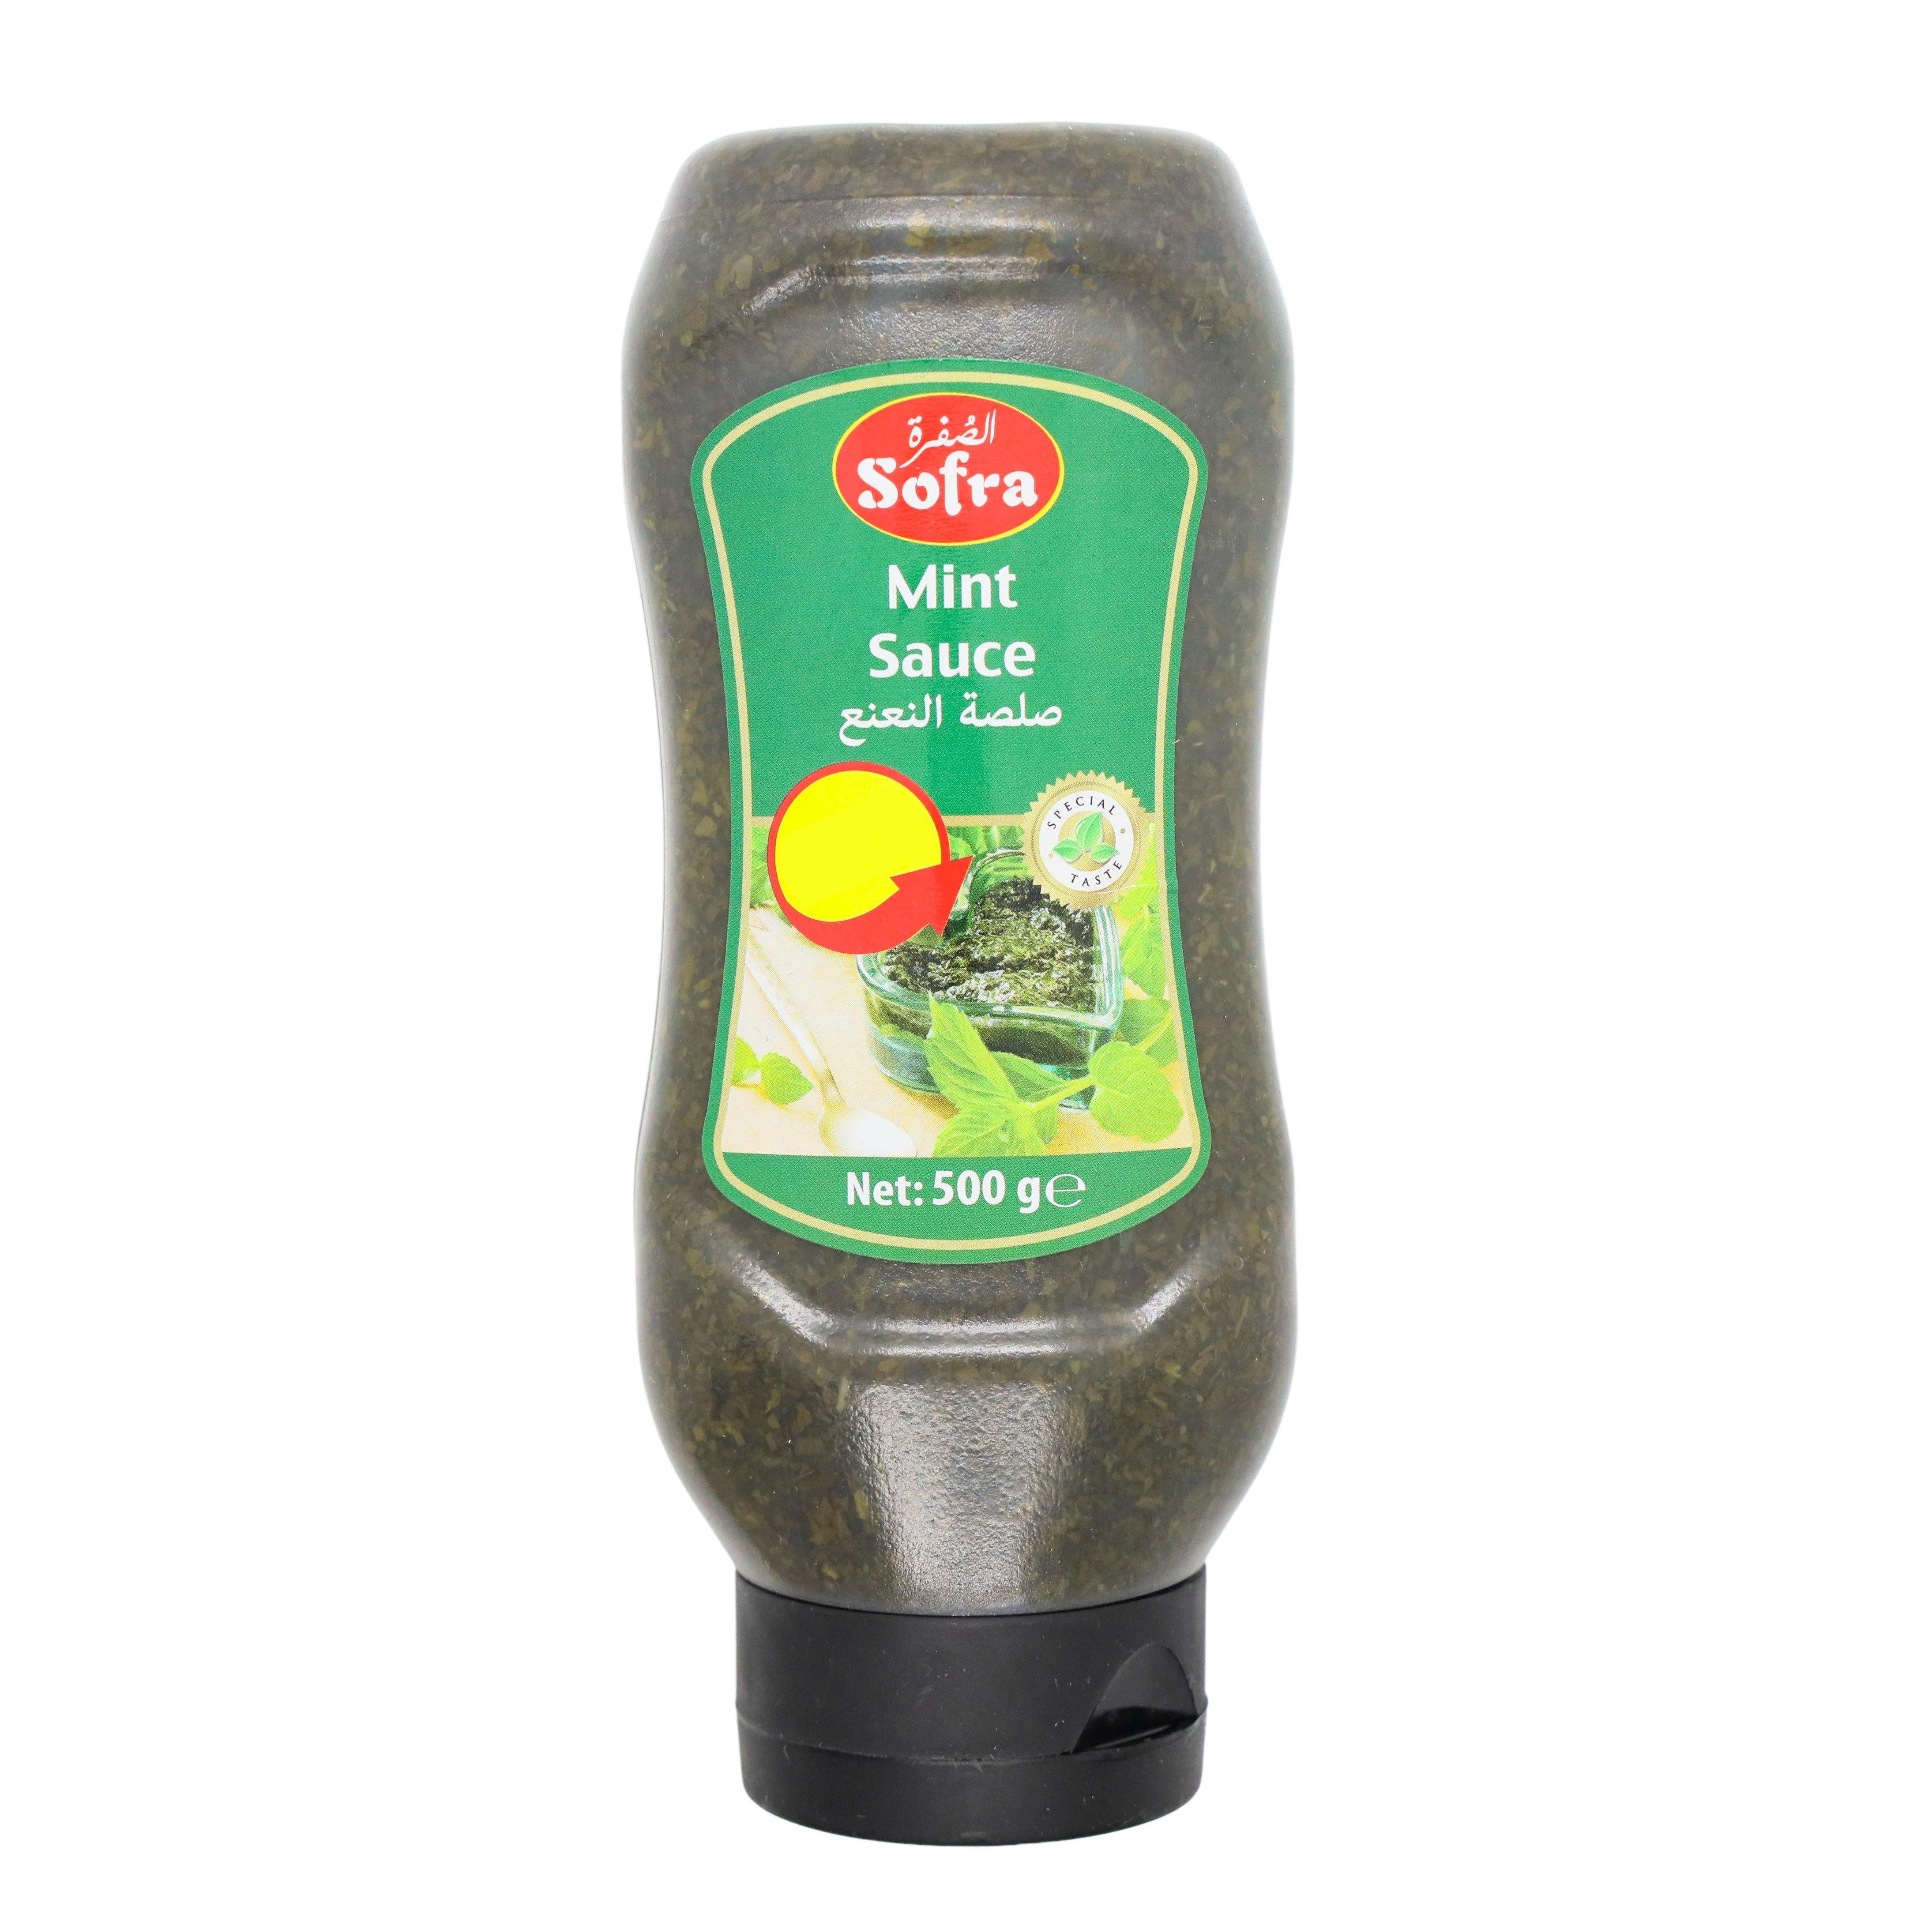 Sofra mint sauce SaveCo Online Ltd